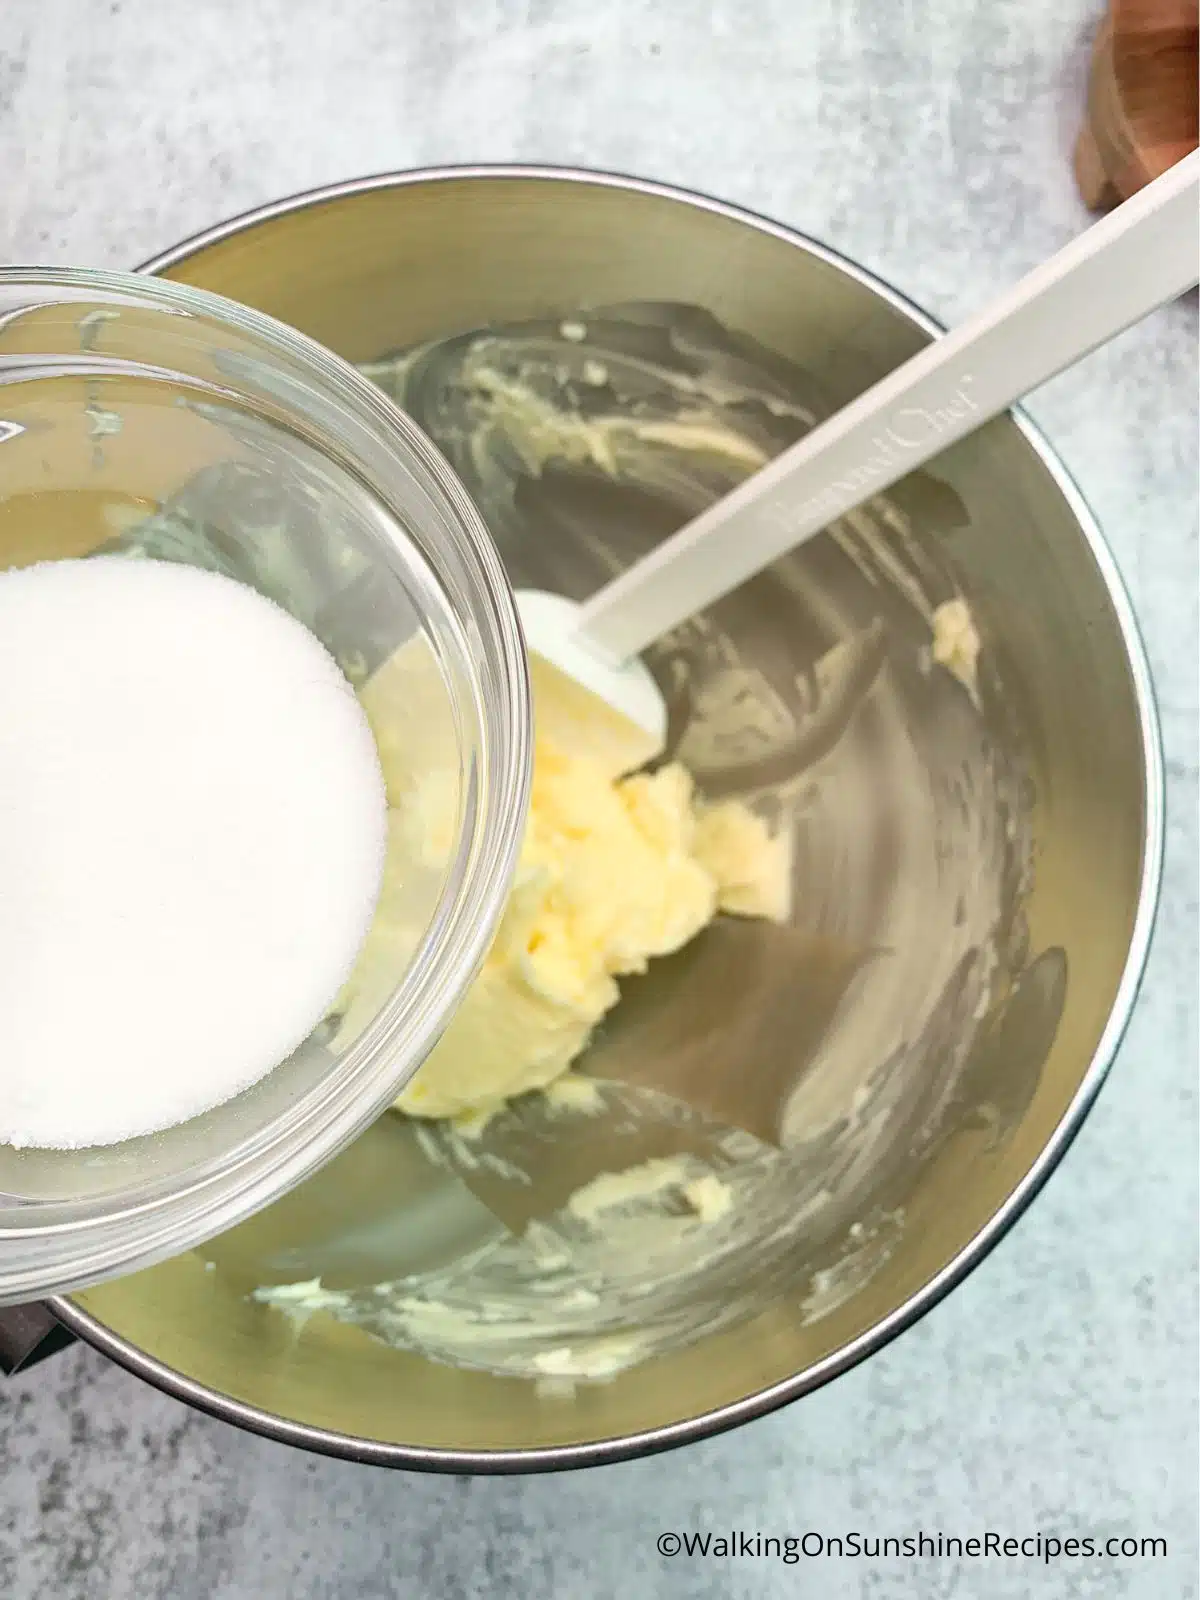 Add sugar to butter mixture.